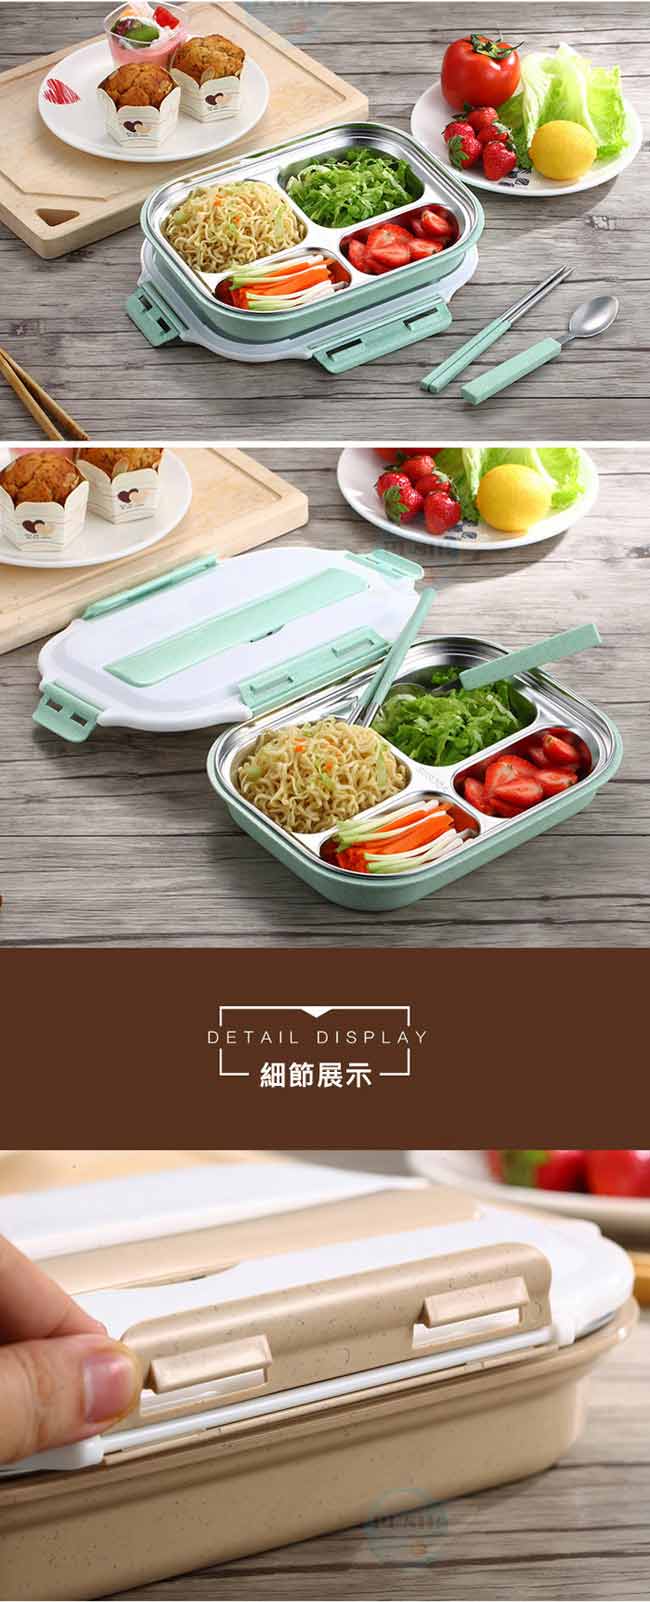 PUSH! 餐具用品304不鏽鋼保溫飯盒便當盒防燙餐盤盒4格環保款附餐具E97